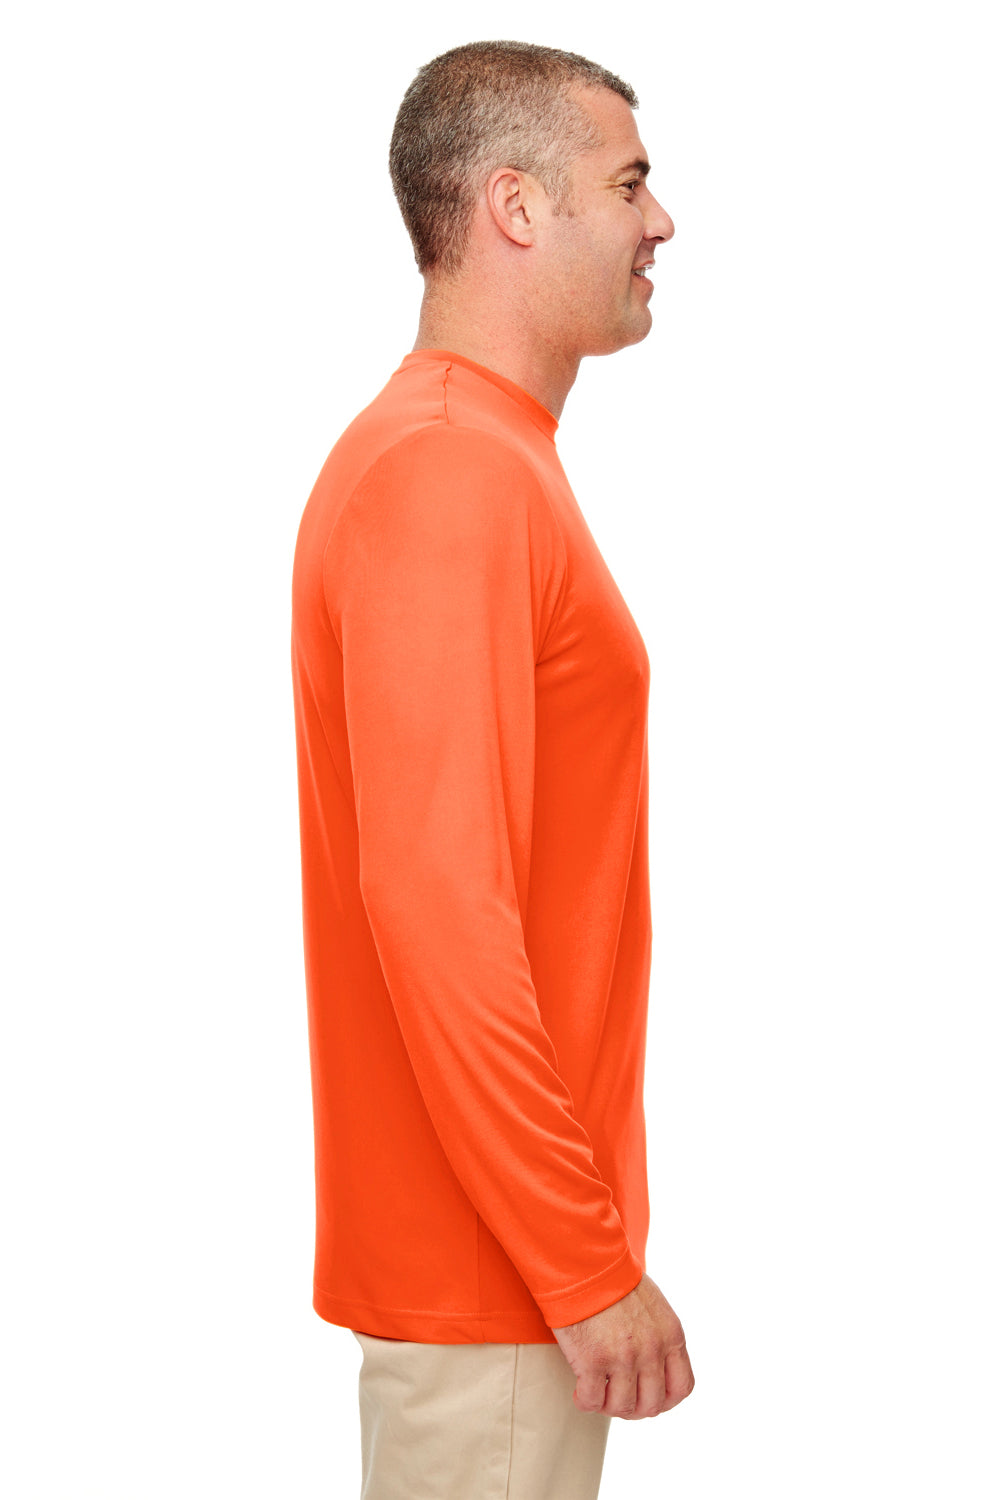 UltraClub 8622 Mens Cool & Dry Performance Moisture Wicking Long Sleeve Crewneck T-Shirt Orange Side